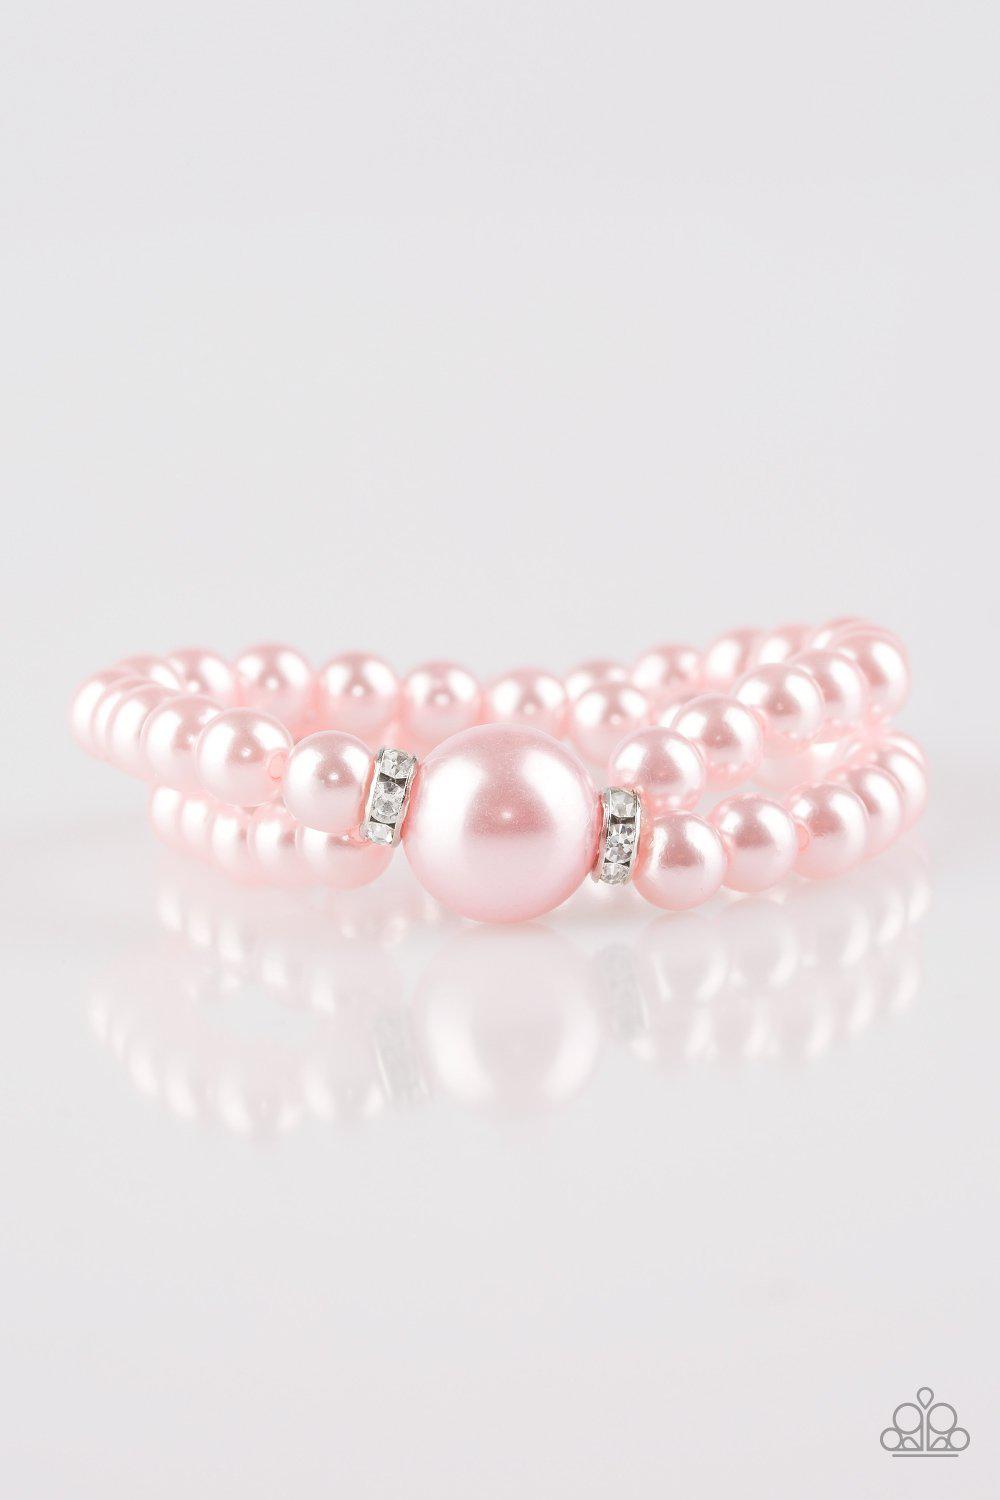 Romantic Redux Pink Pearl Bracelet - Paparazzi Accessories-CarasShop.com - $5 Jewelry by Cara Jewels